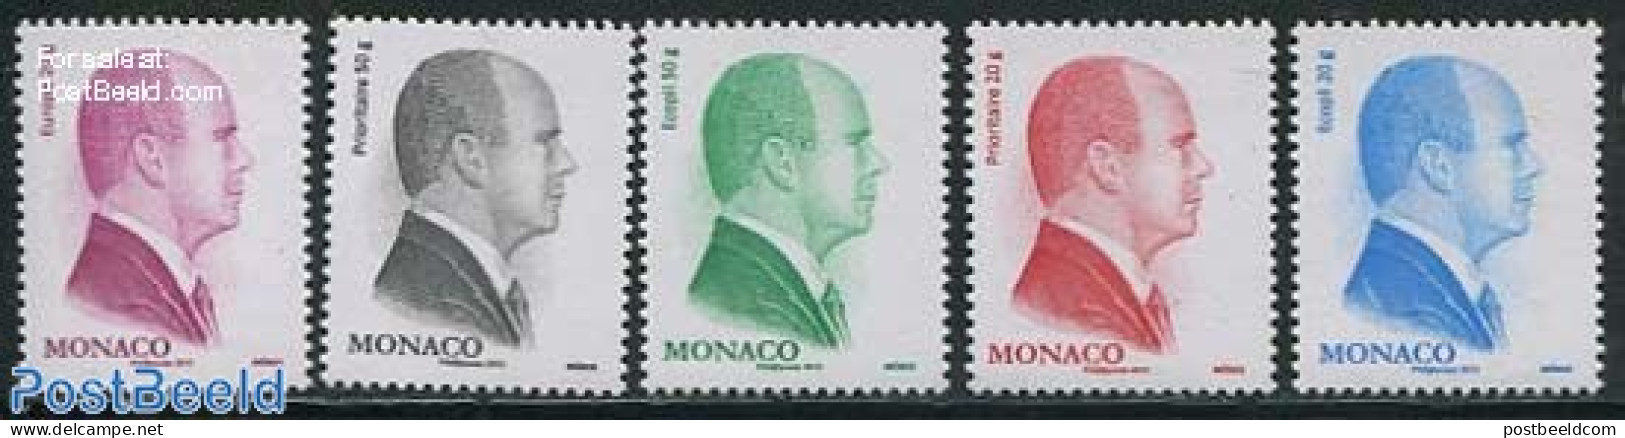 Monaco 2012 Definitives, Albert II 5v, Mint NH - Ungebraucht